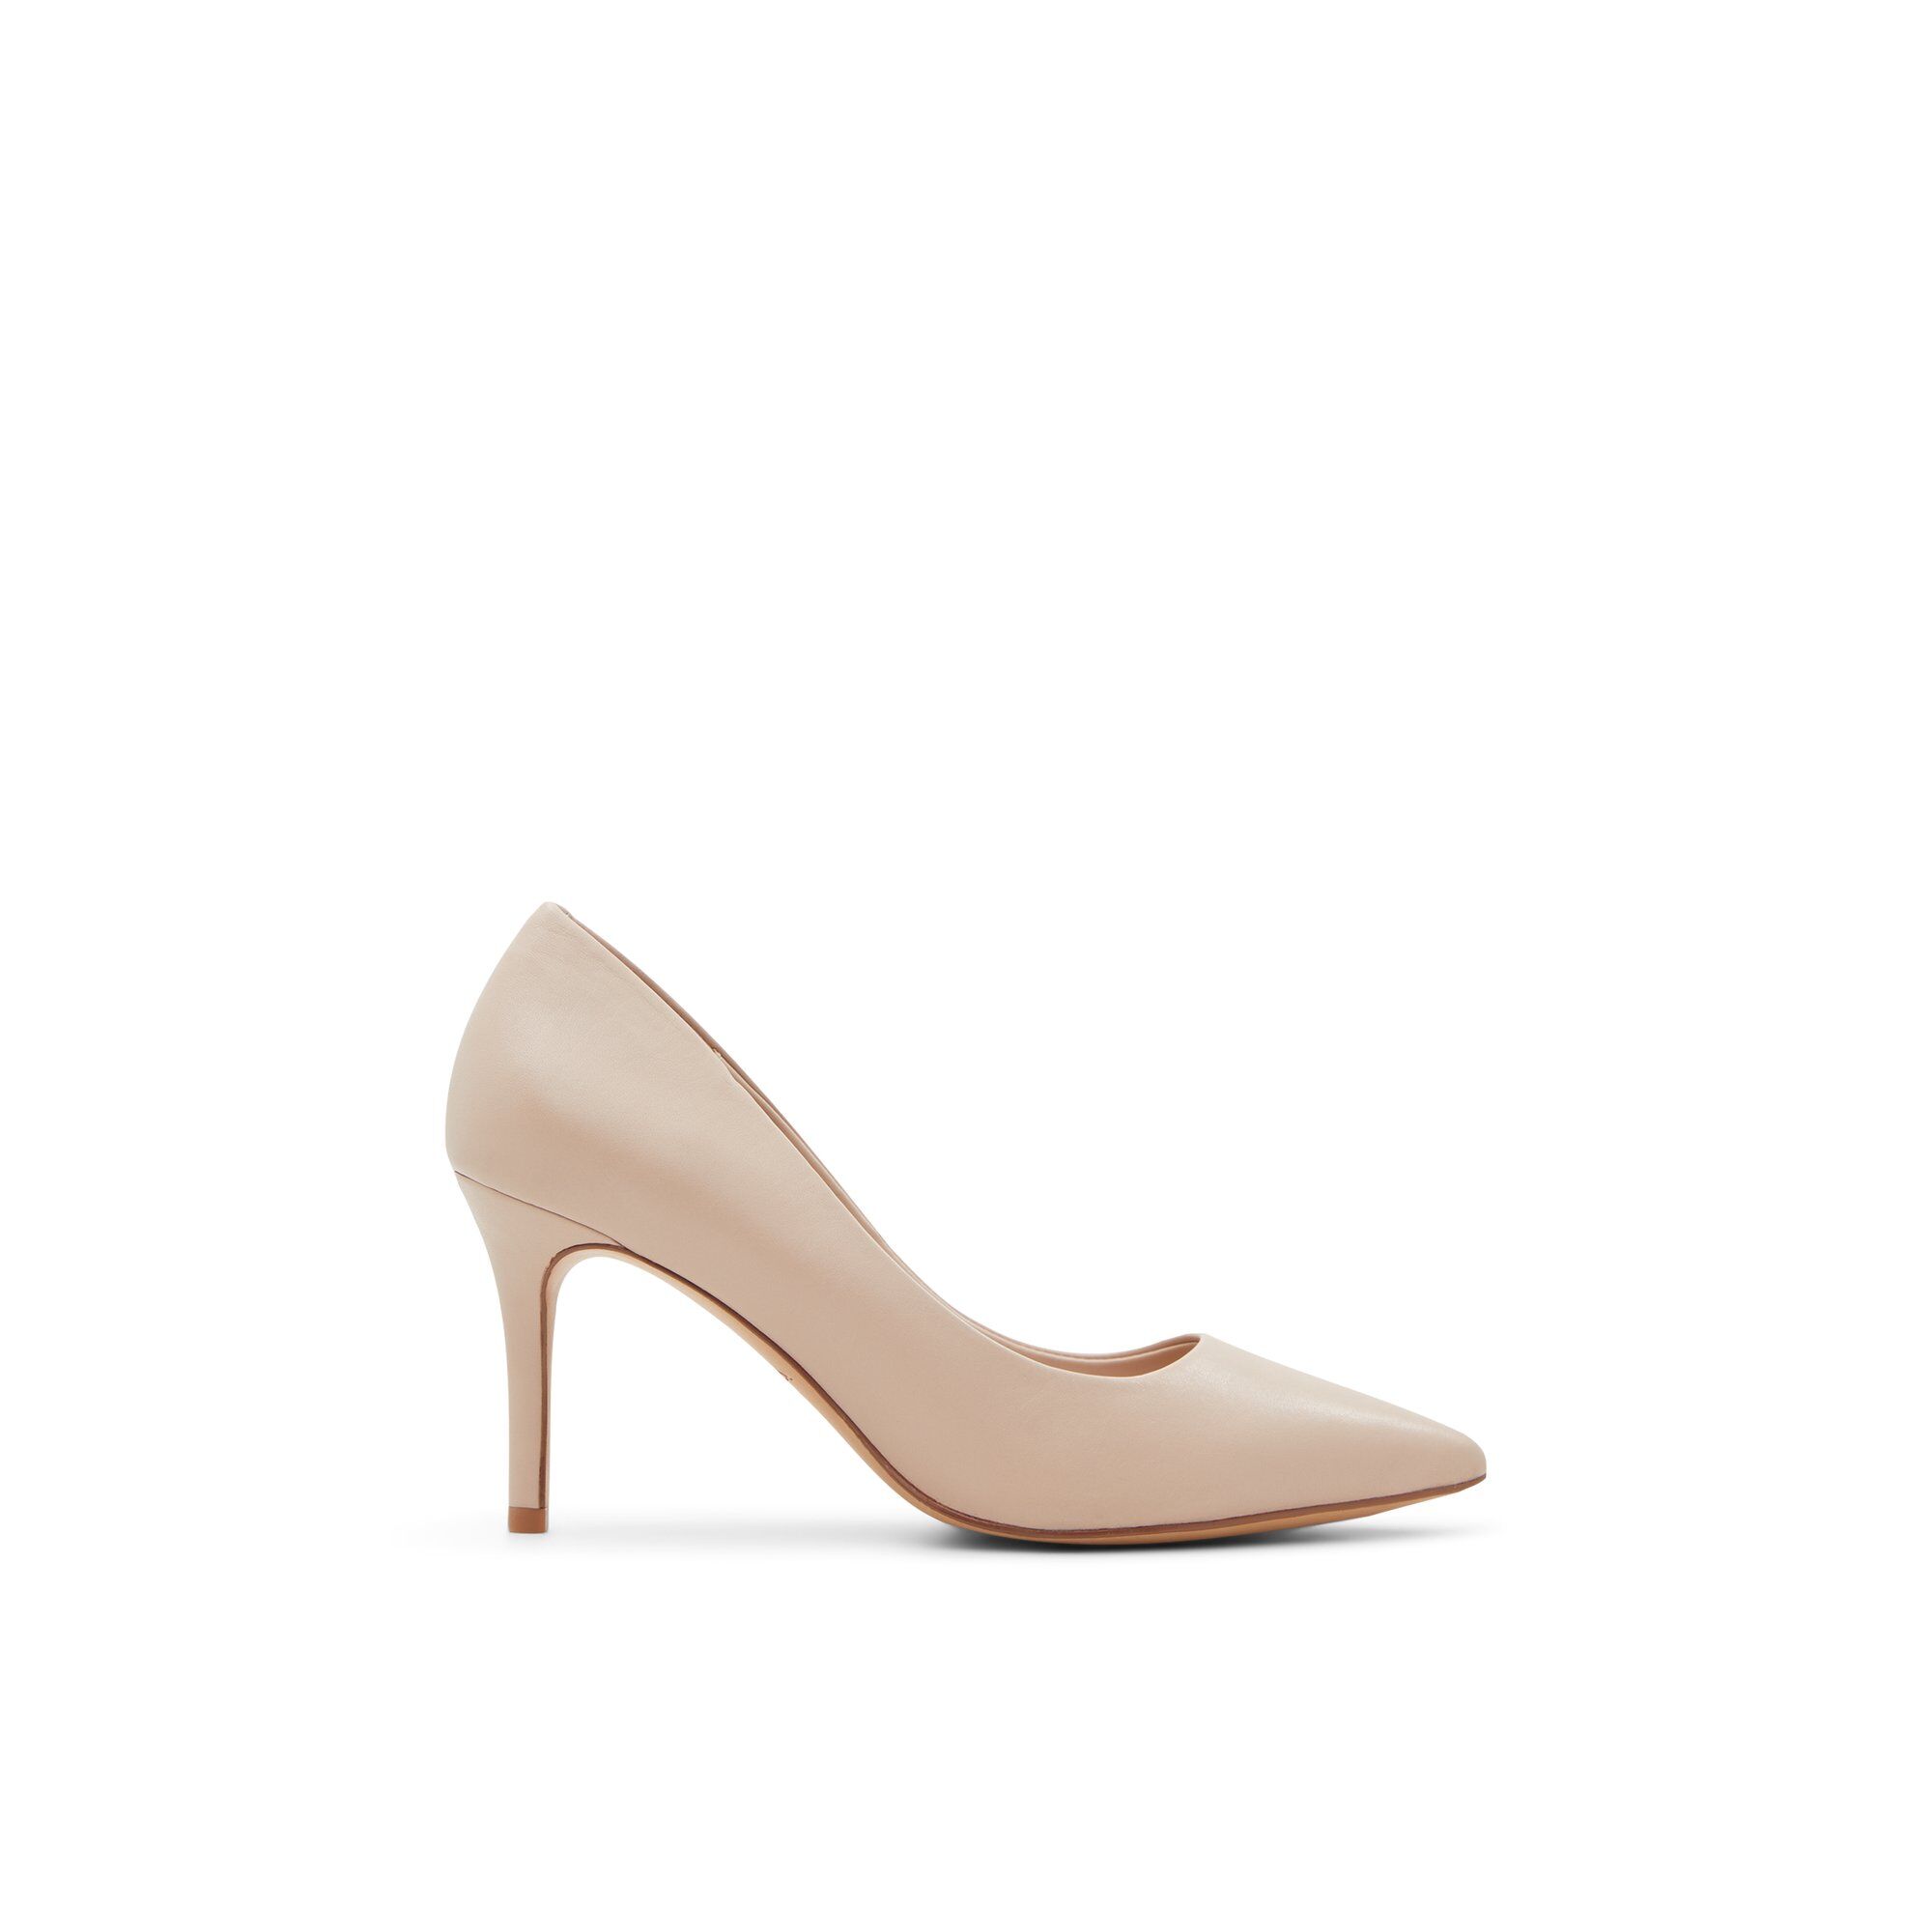 ALDO Sereniti - Women's Heel - Beige, Size 6.5